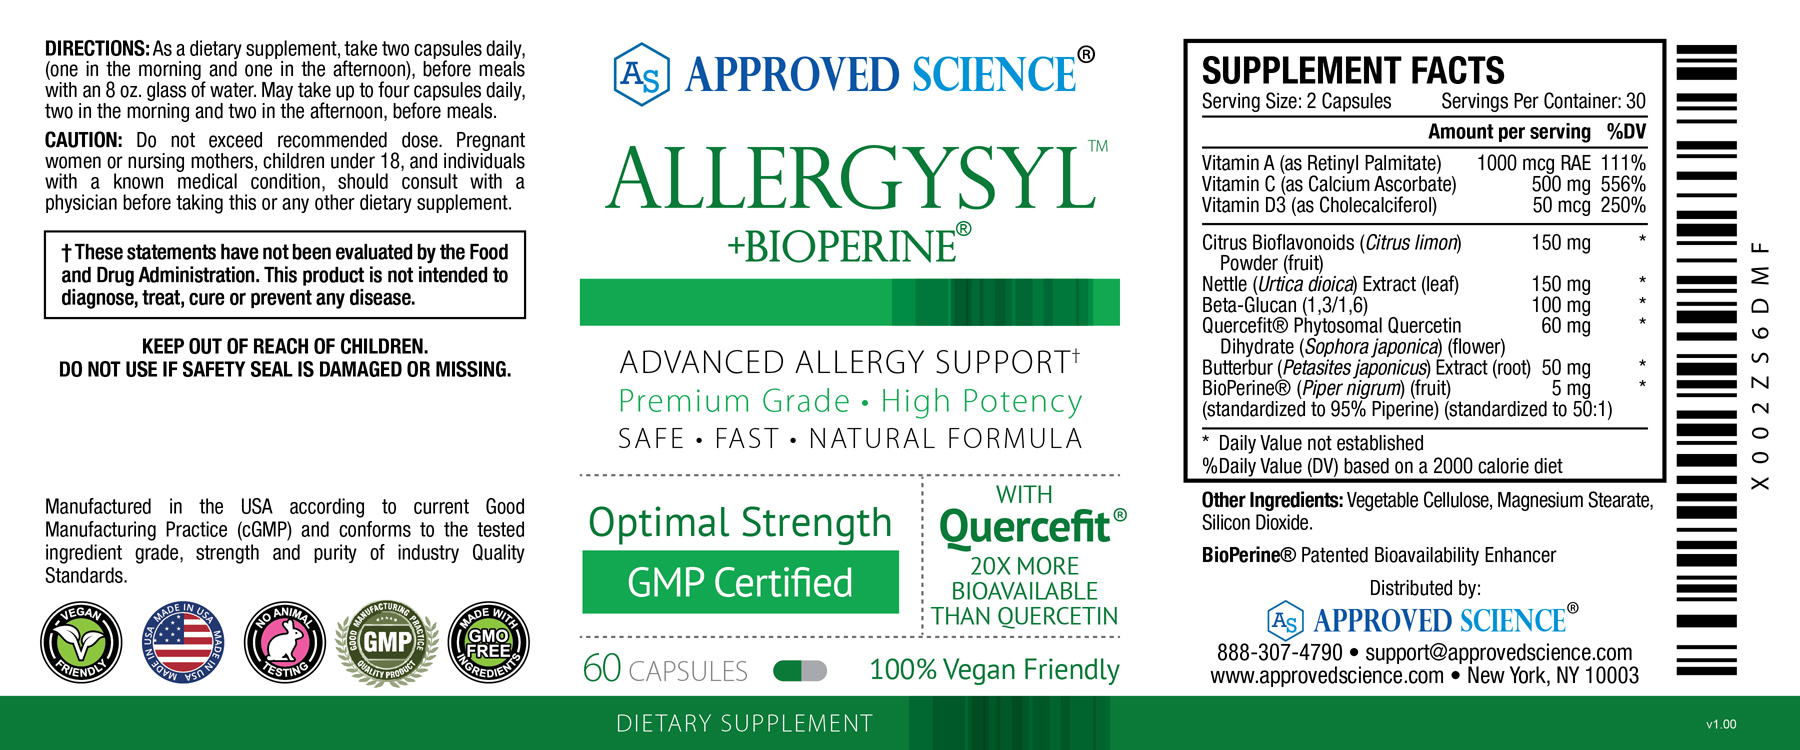 Allergysyl™ Supplement Facts